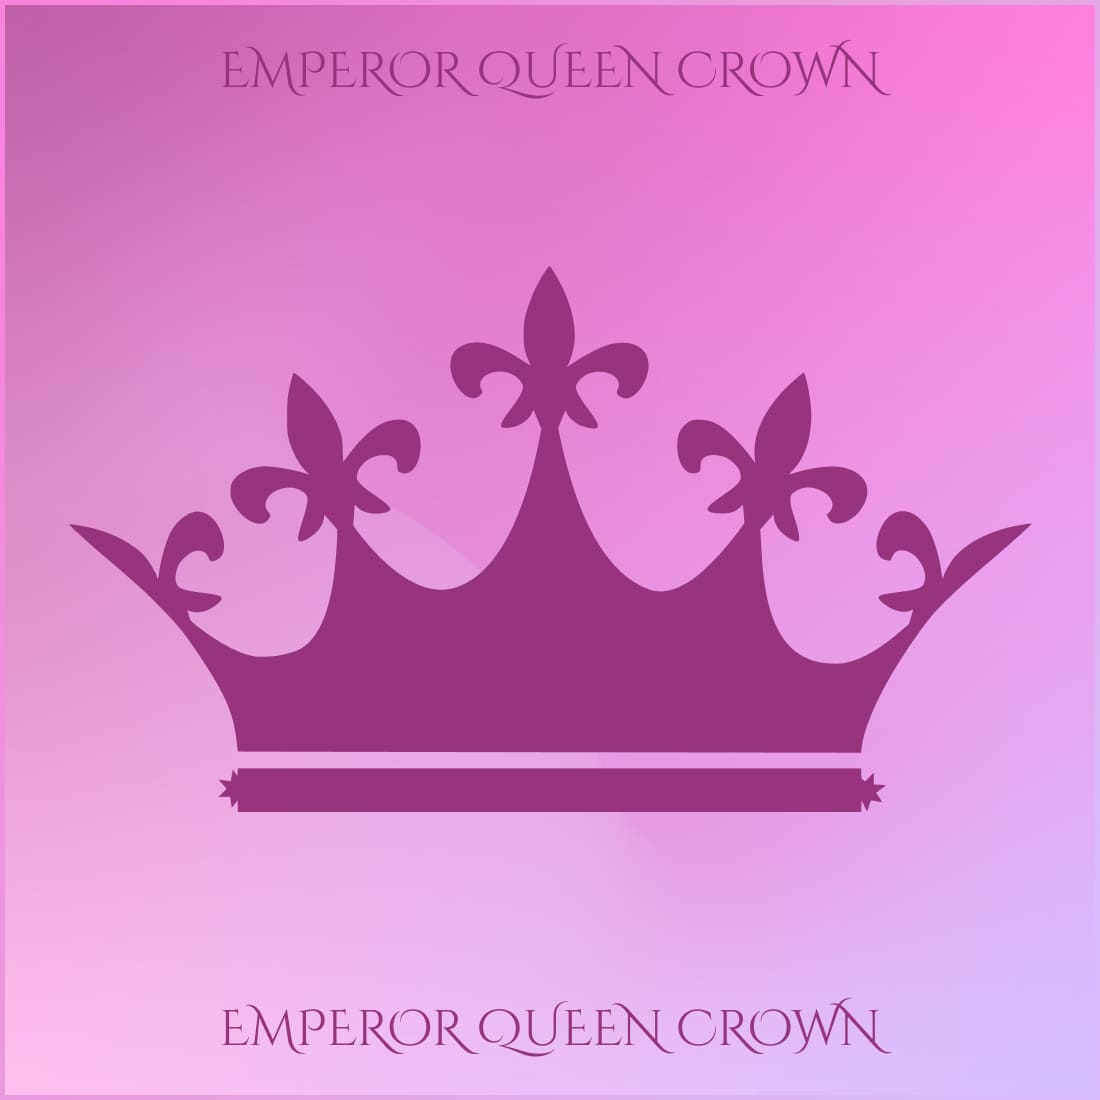 Emperor Queen Crown main cover.